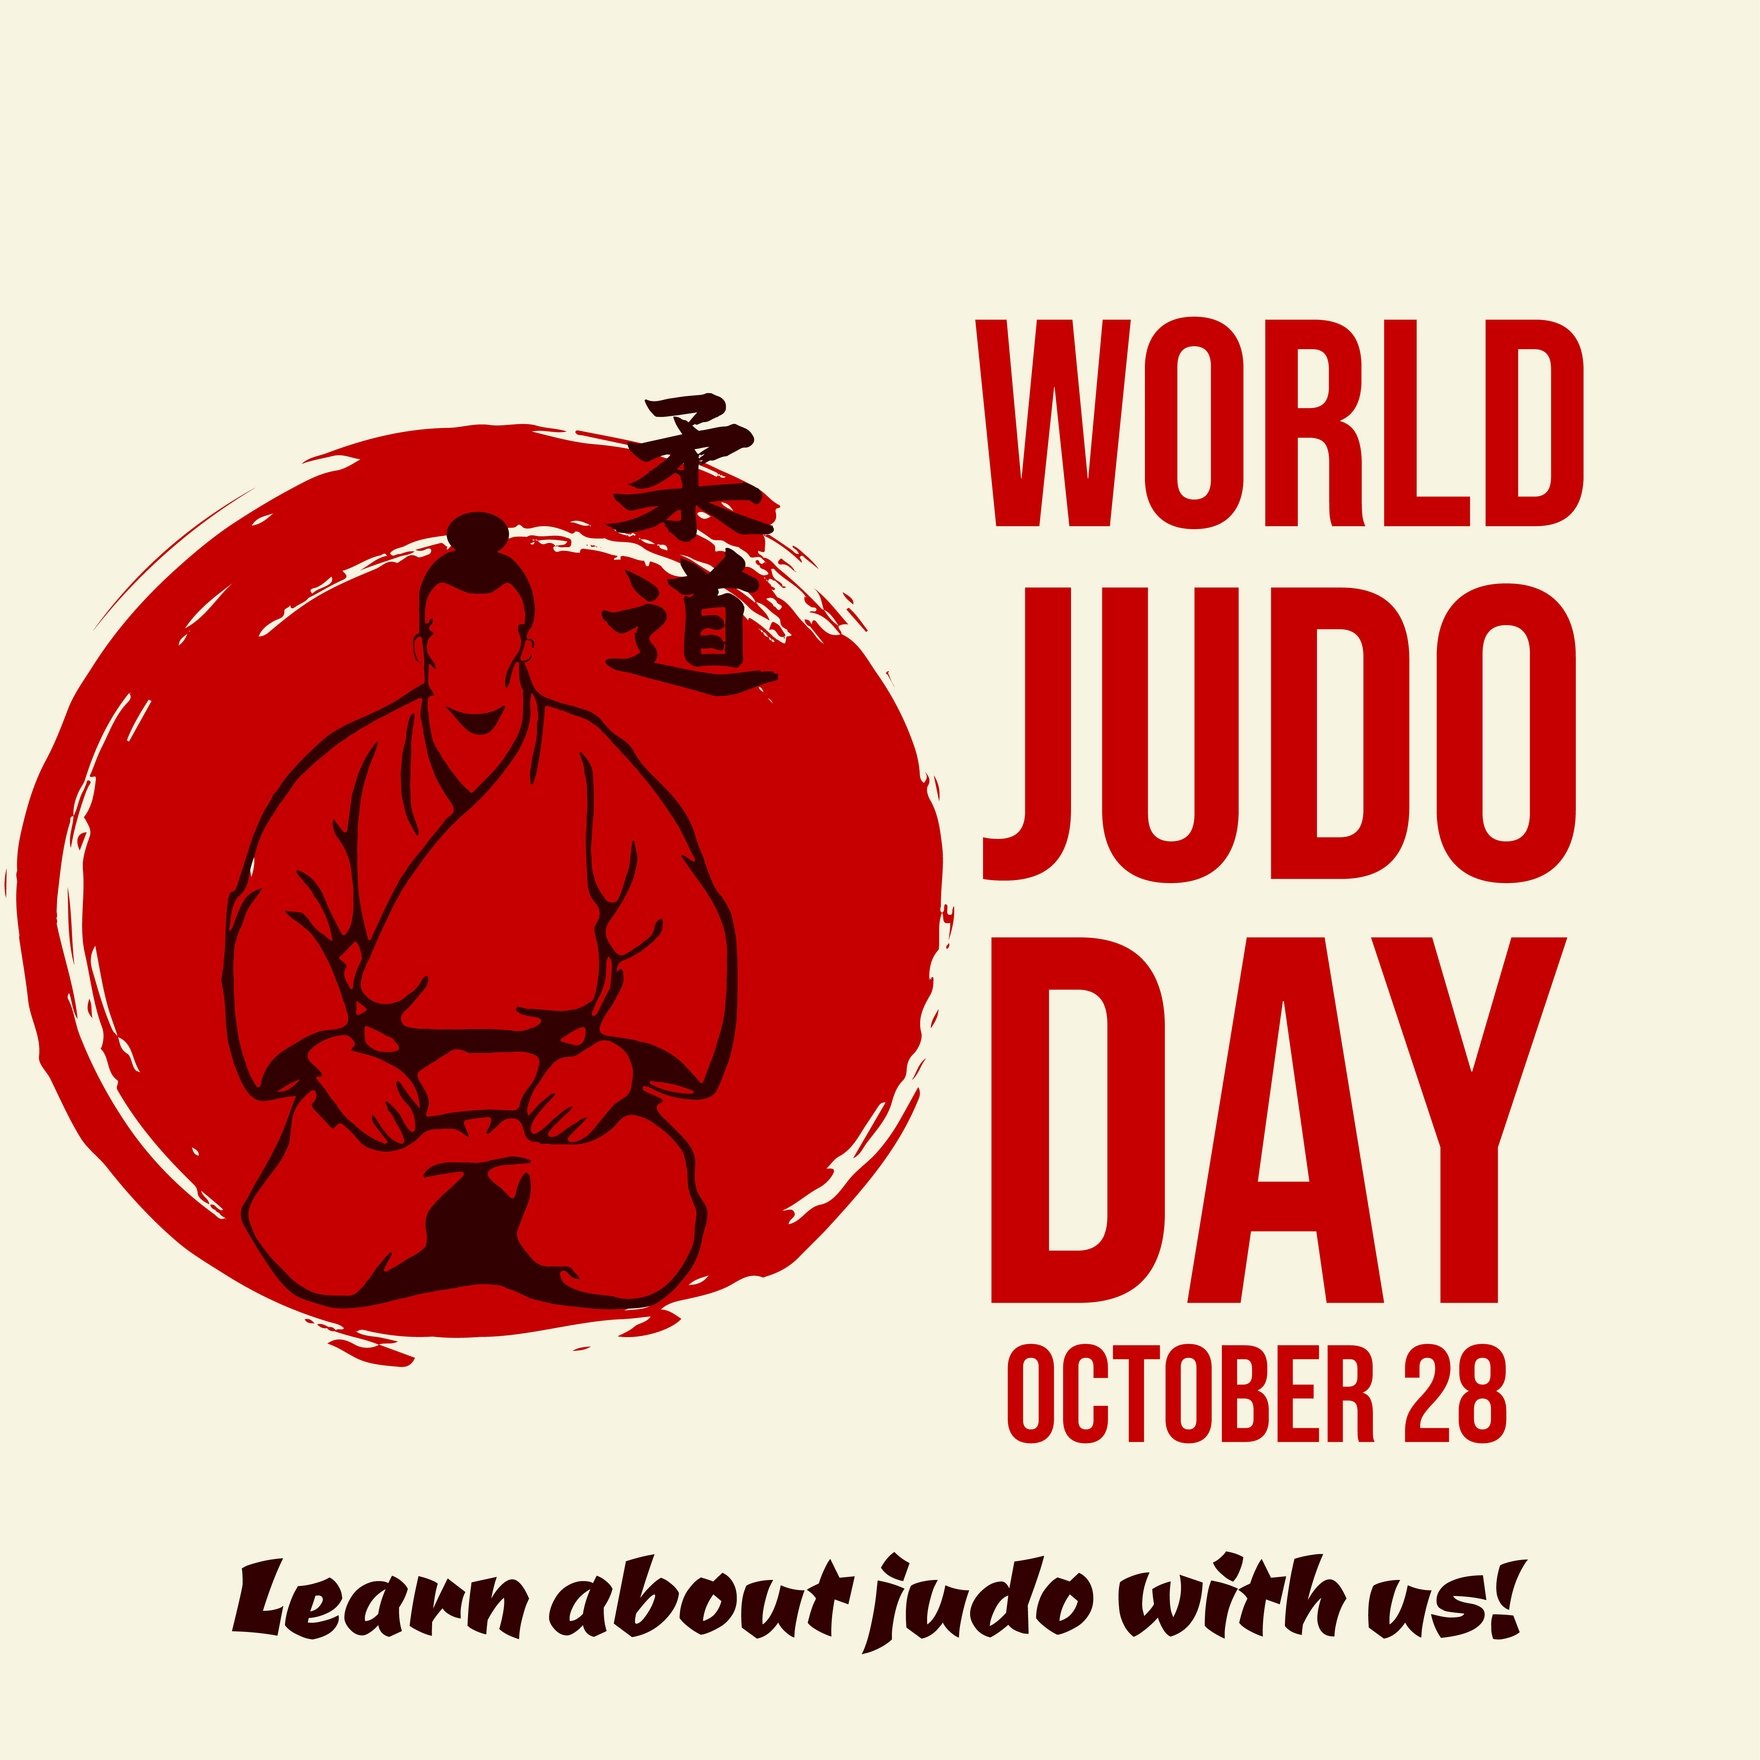 Free World Judo Day Instagram Post in Illustrator, PSD, EPS, SVG, JPG, PNG